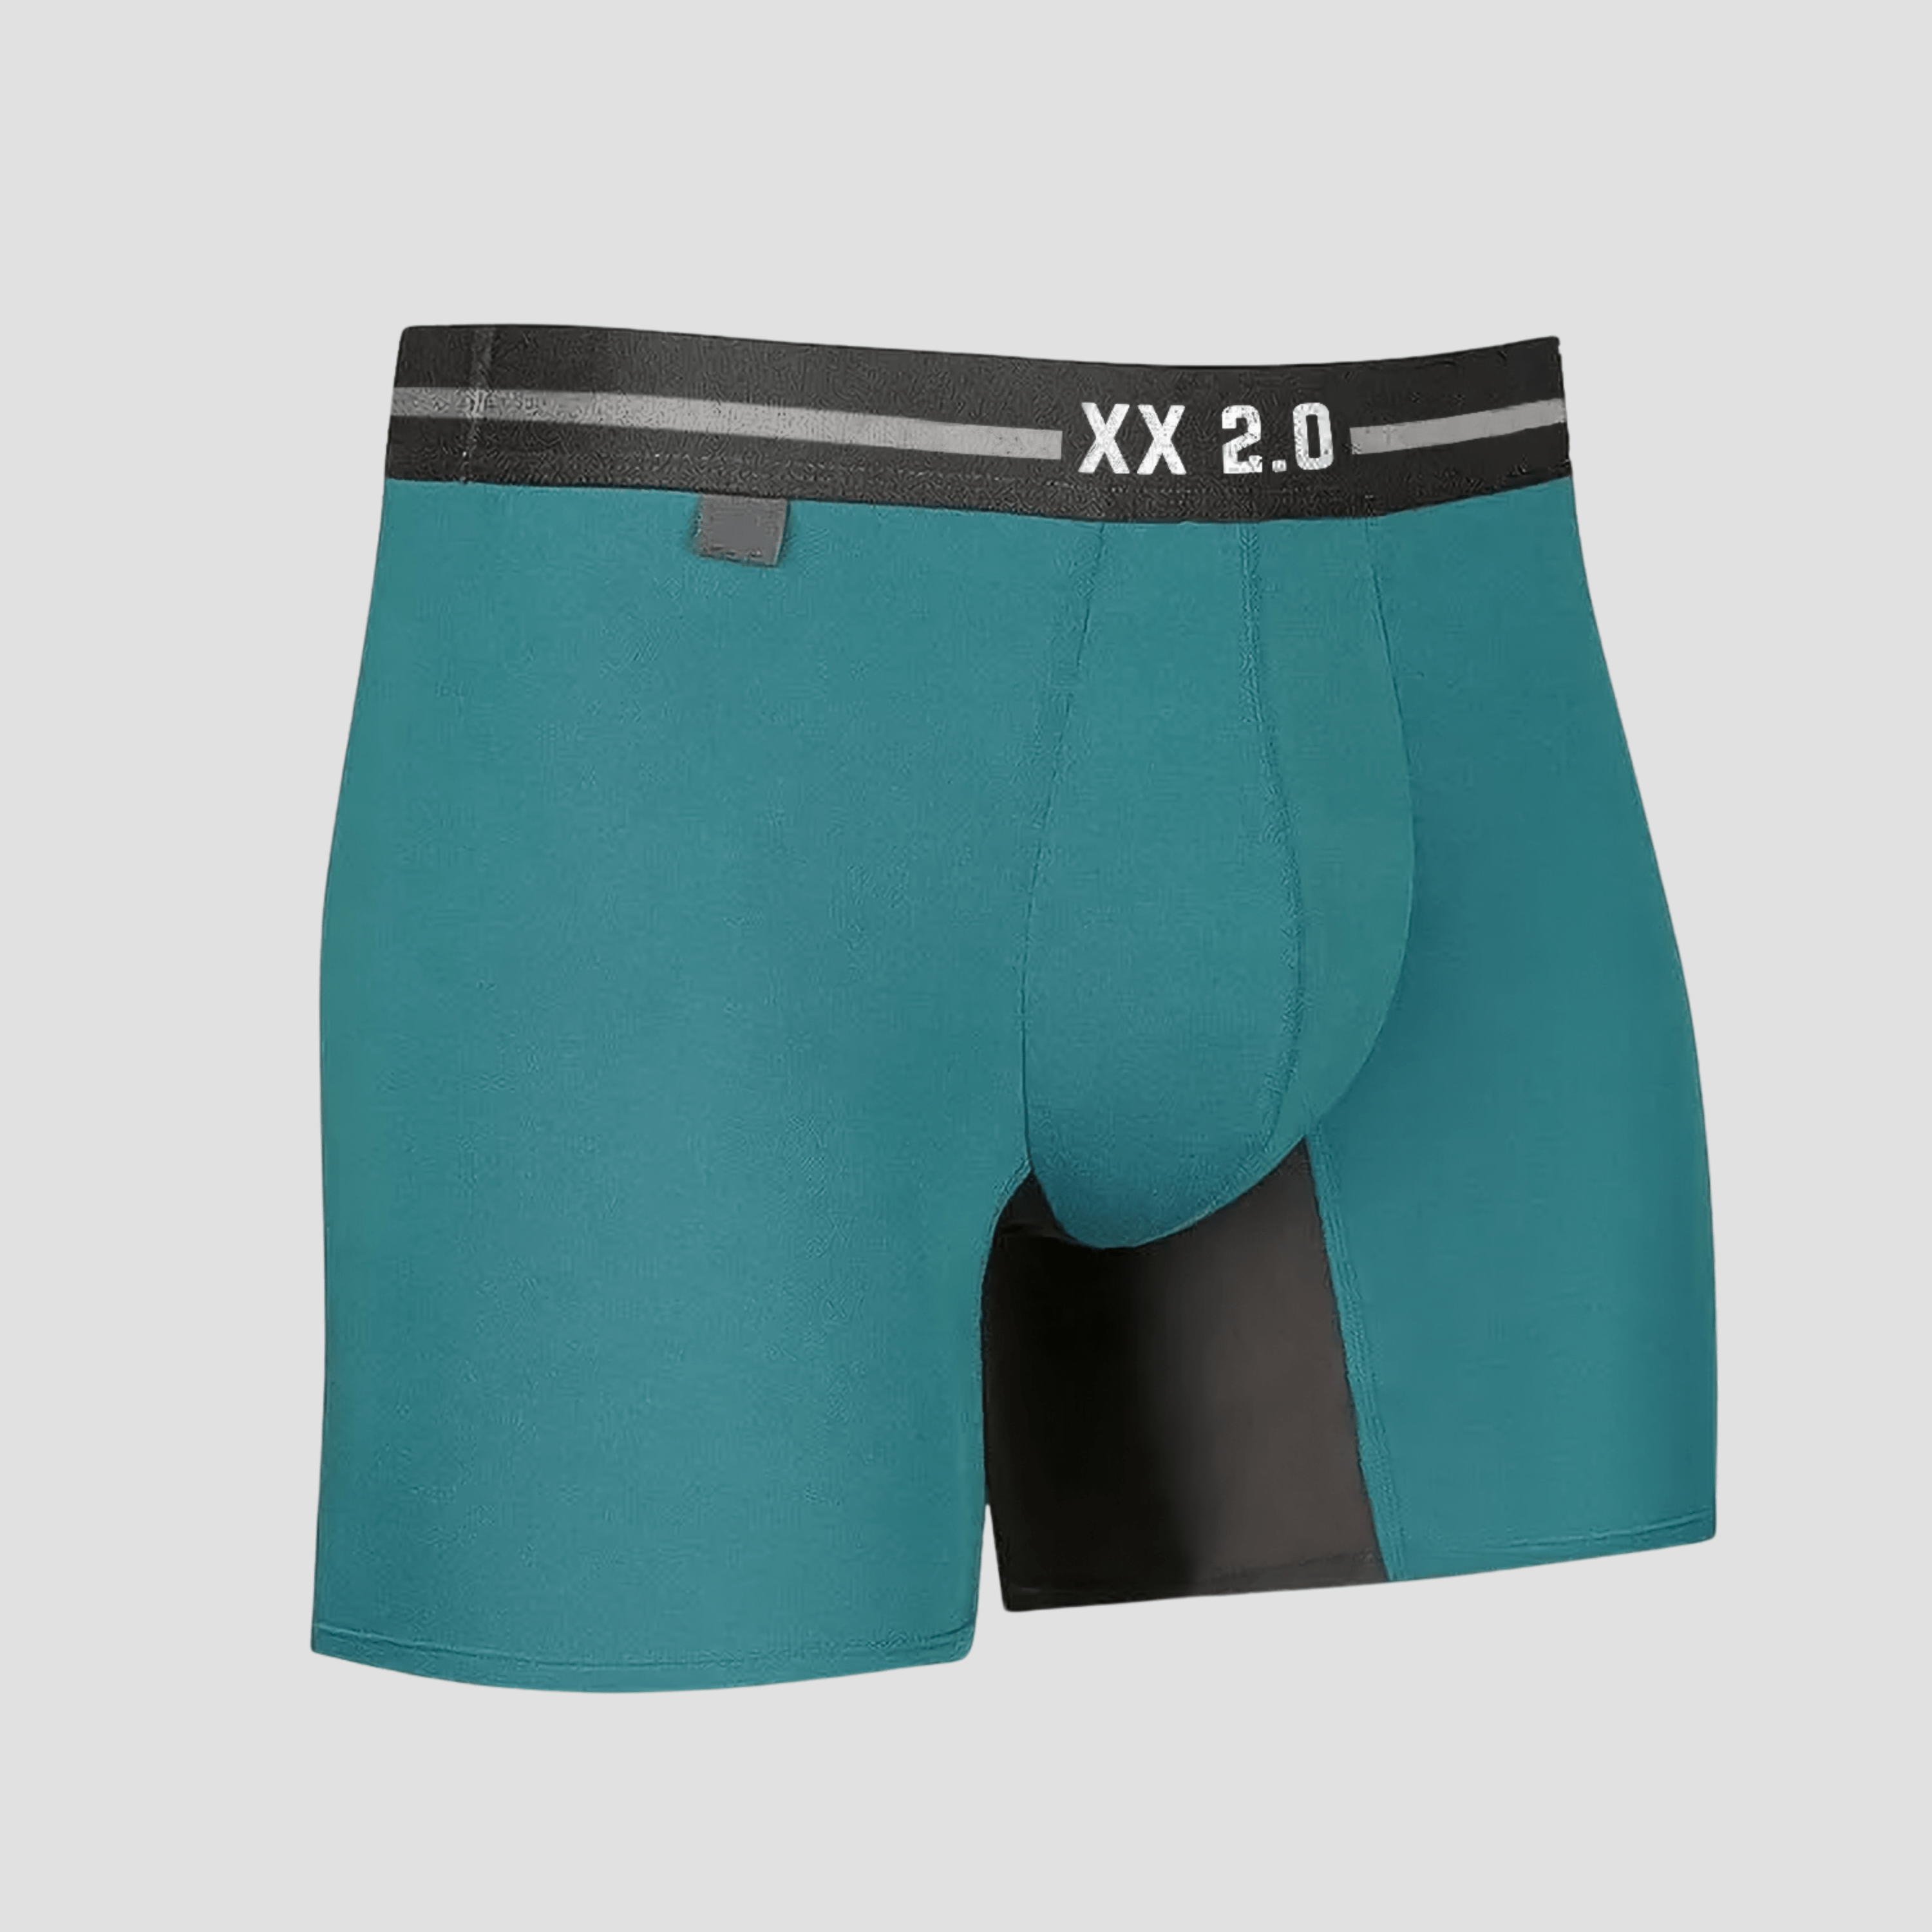 BOXXIS 2.0 / Boxershorts Schwarz